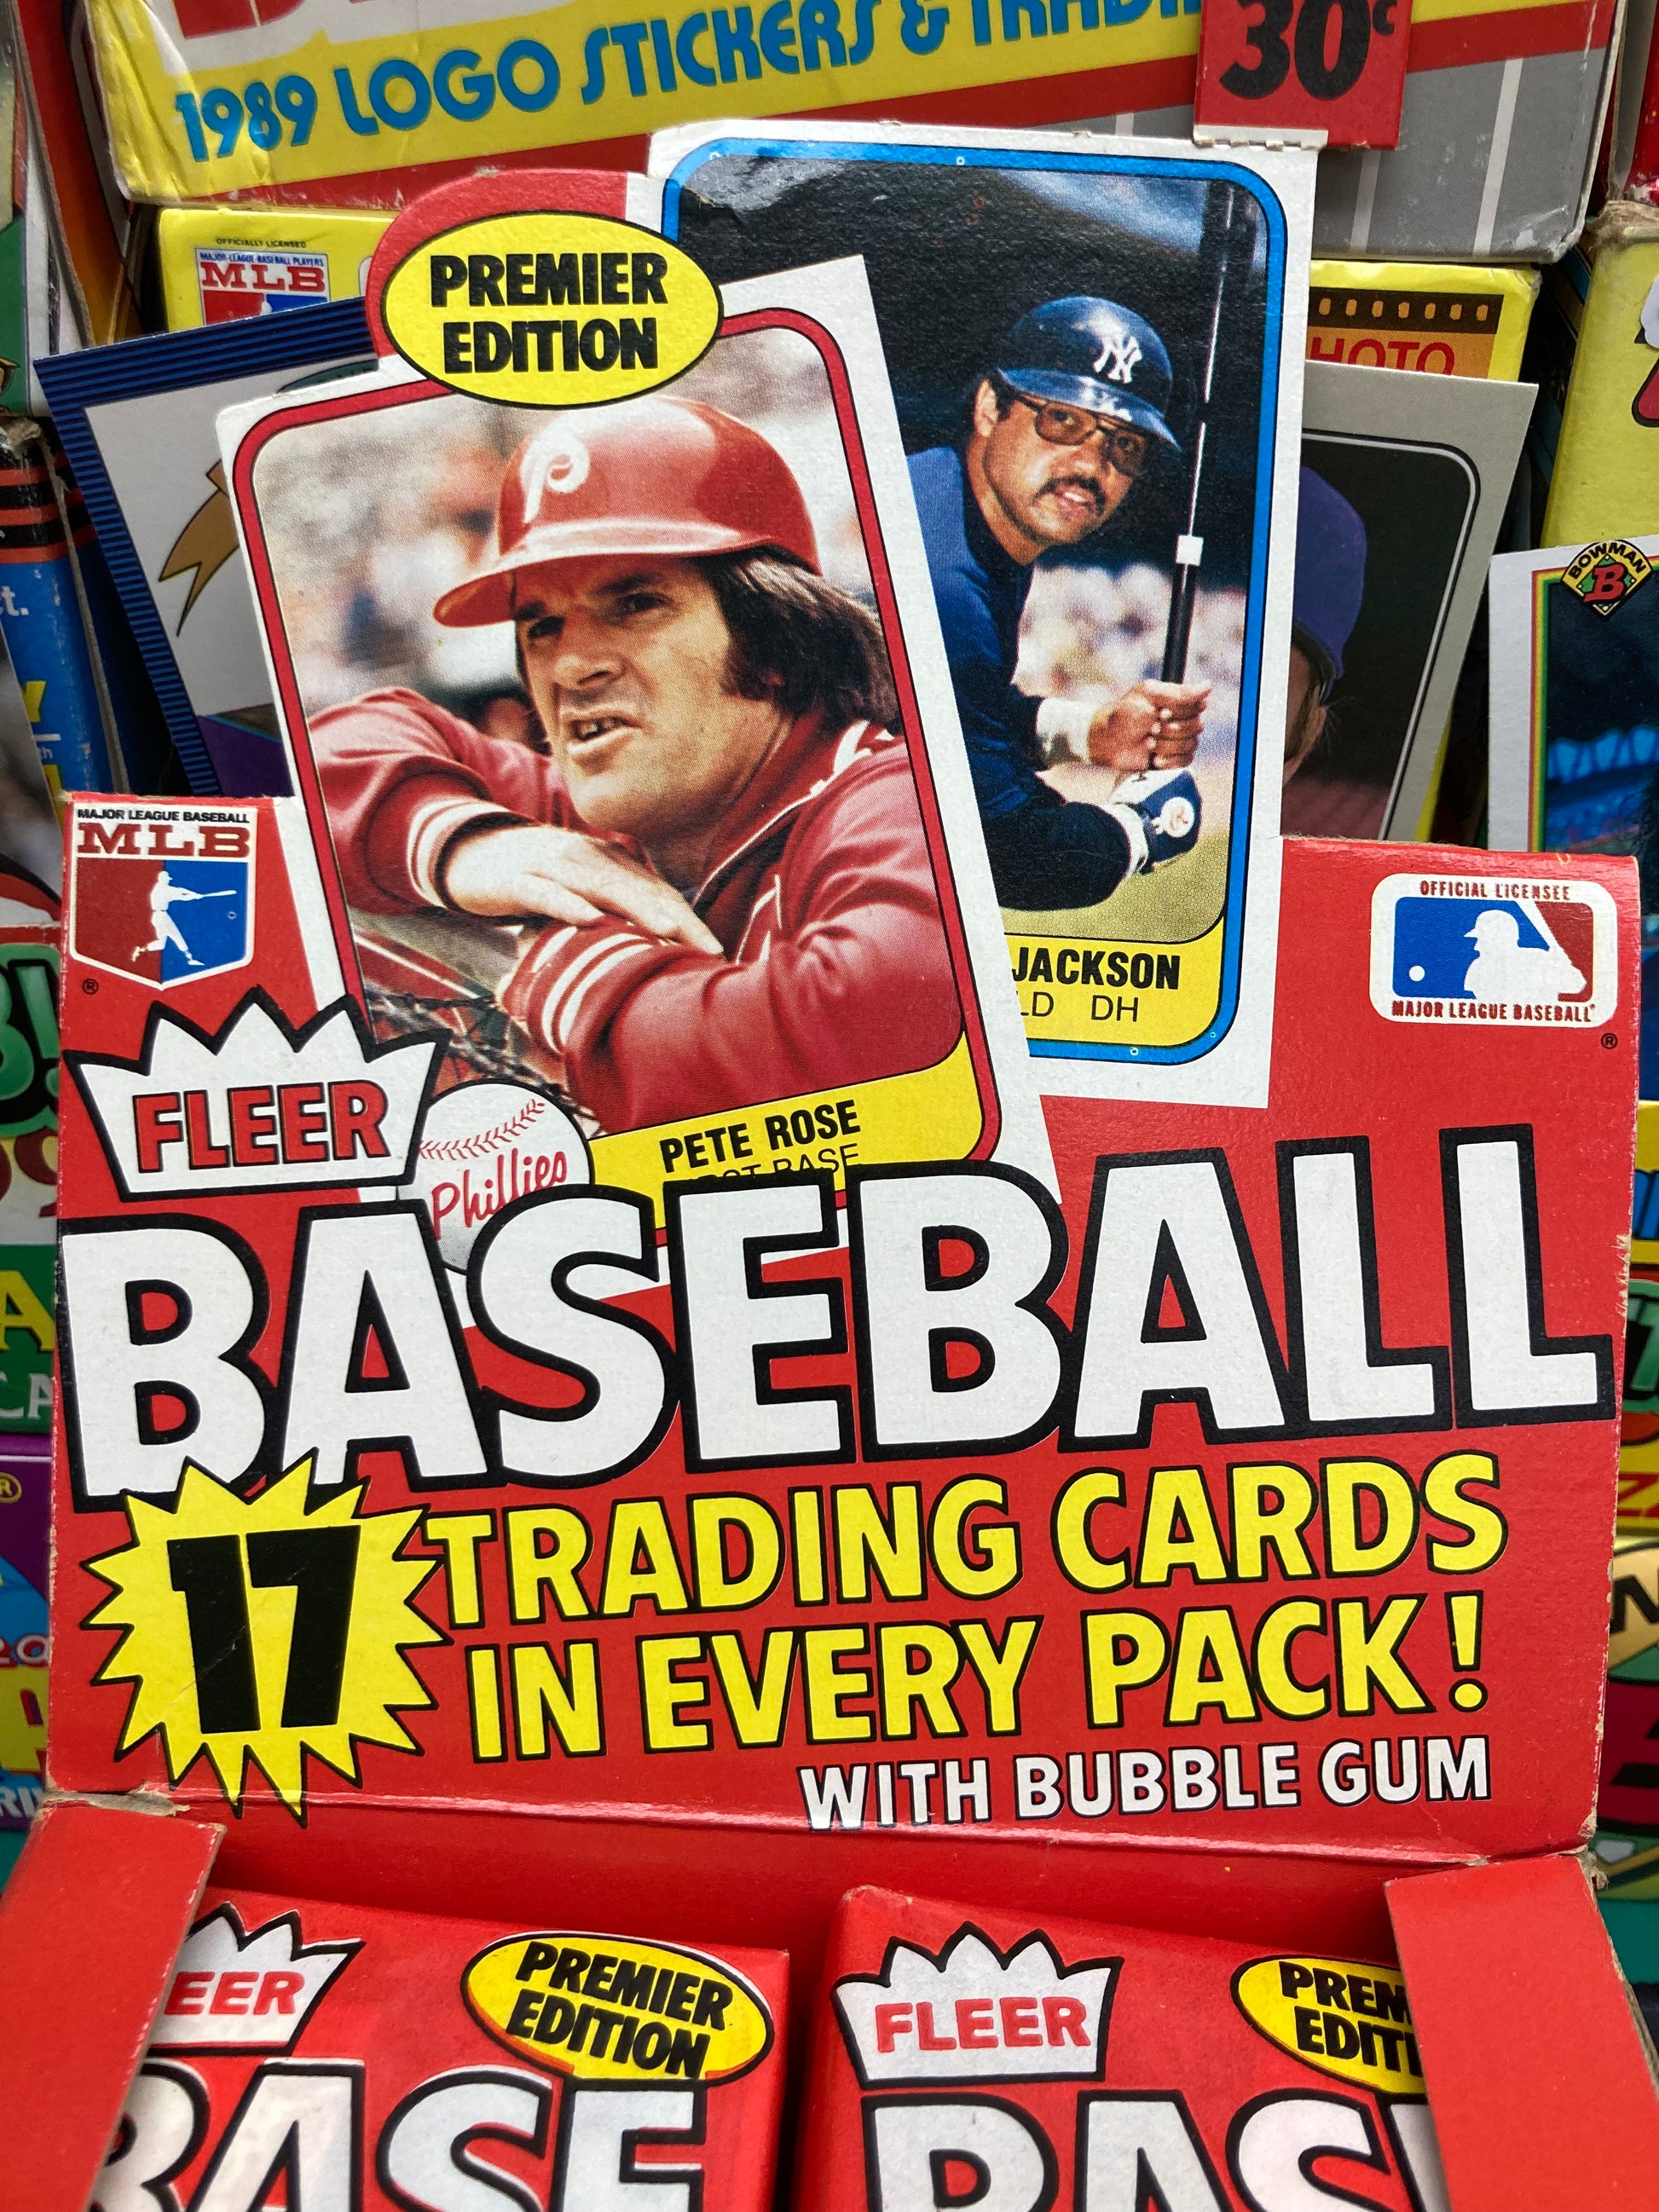 Auction Prices Realized Baseball Cards 1981 Fleer Dan Ainge